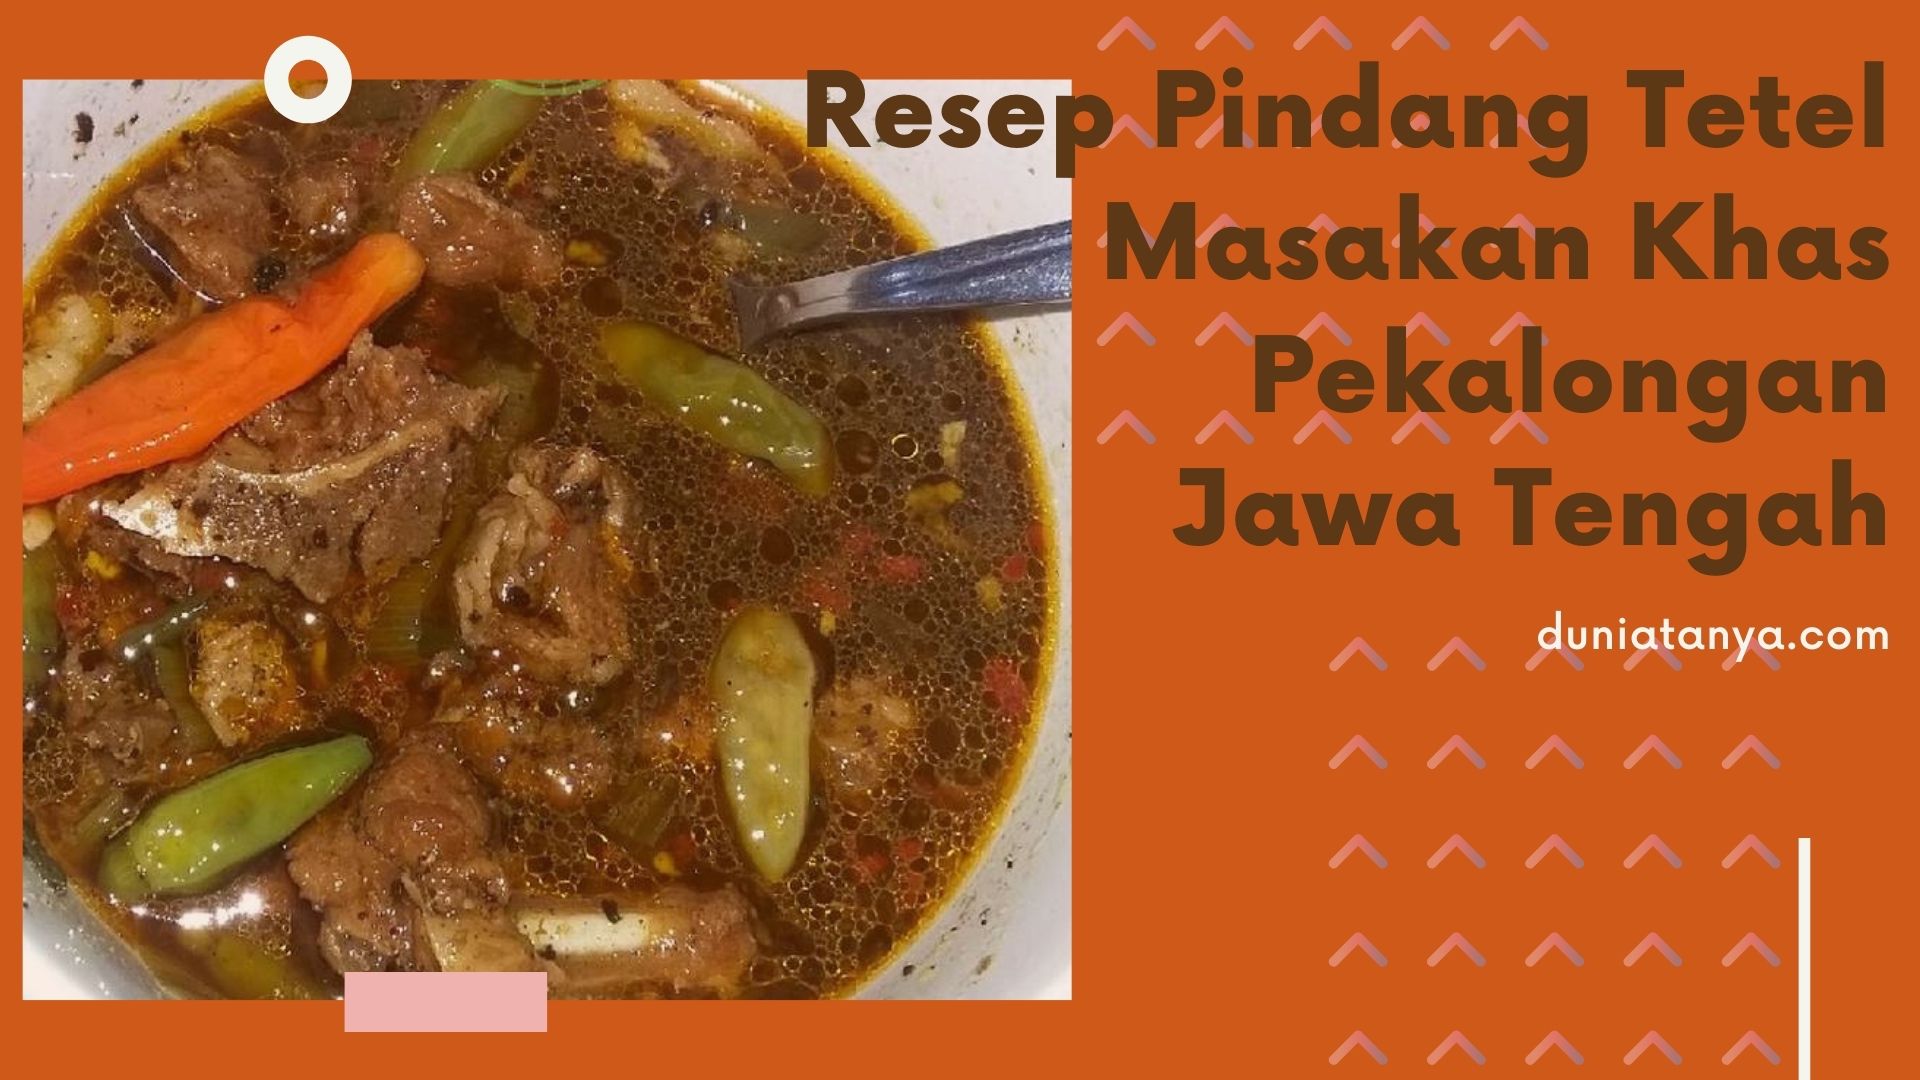 You are currently viewing Resep Pindang Tetel Masakan Khas Pekalongan Jawa Tengah